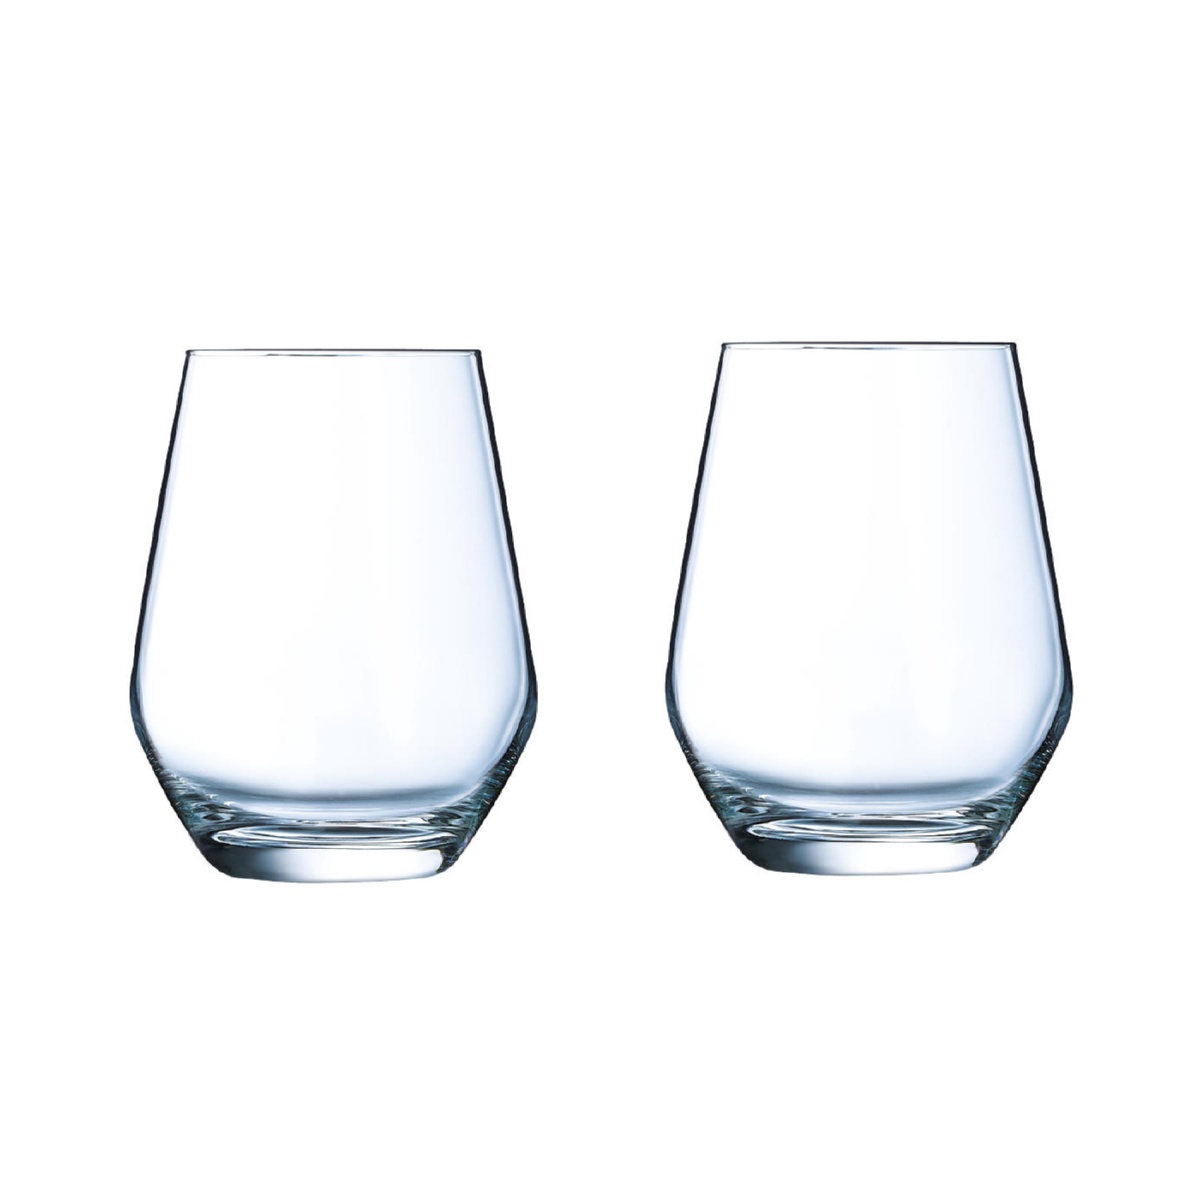 Набор стаканов Gipfel Vina Juliette 51131 2 предмета набор бокалов gipfel vina juliette 51132 2 предмета